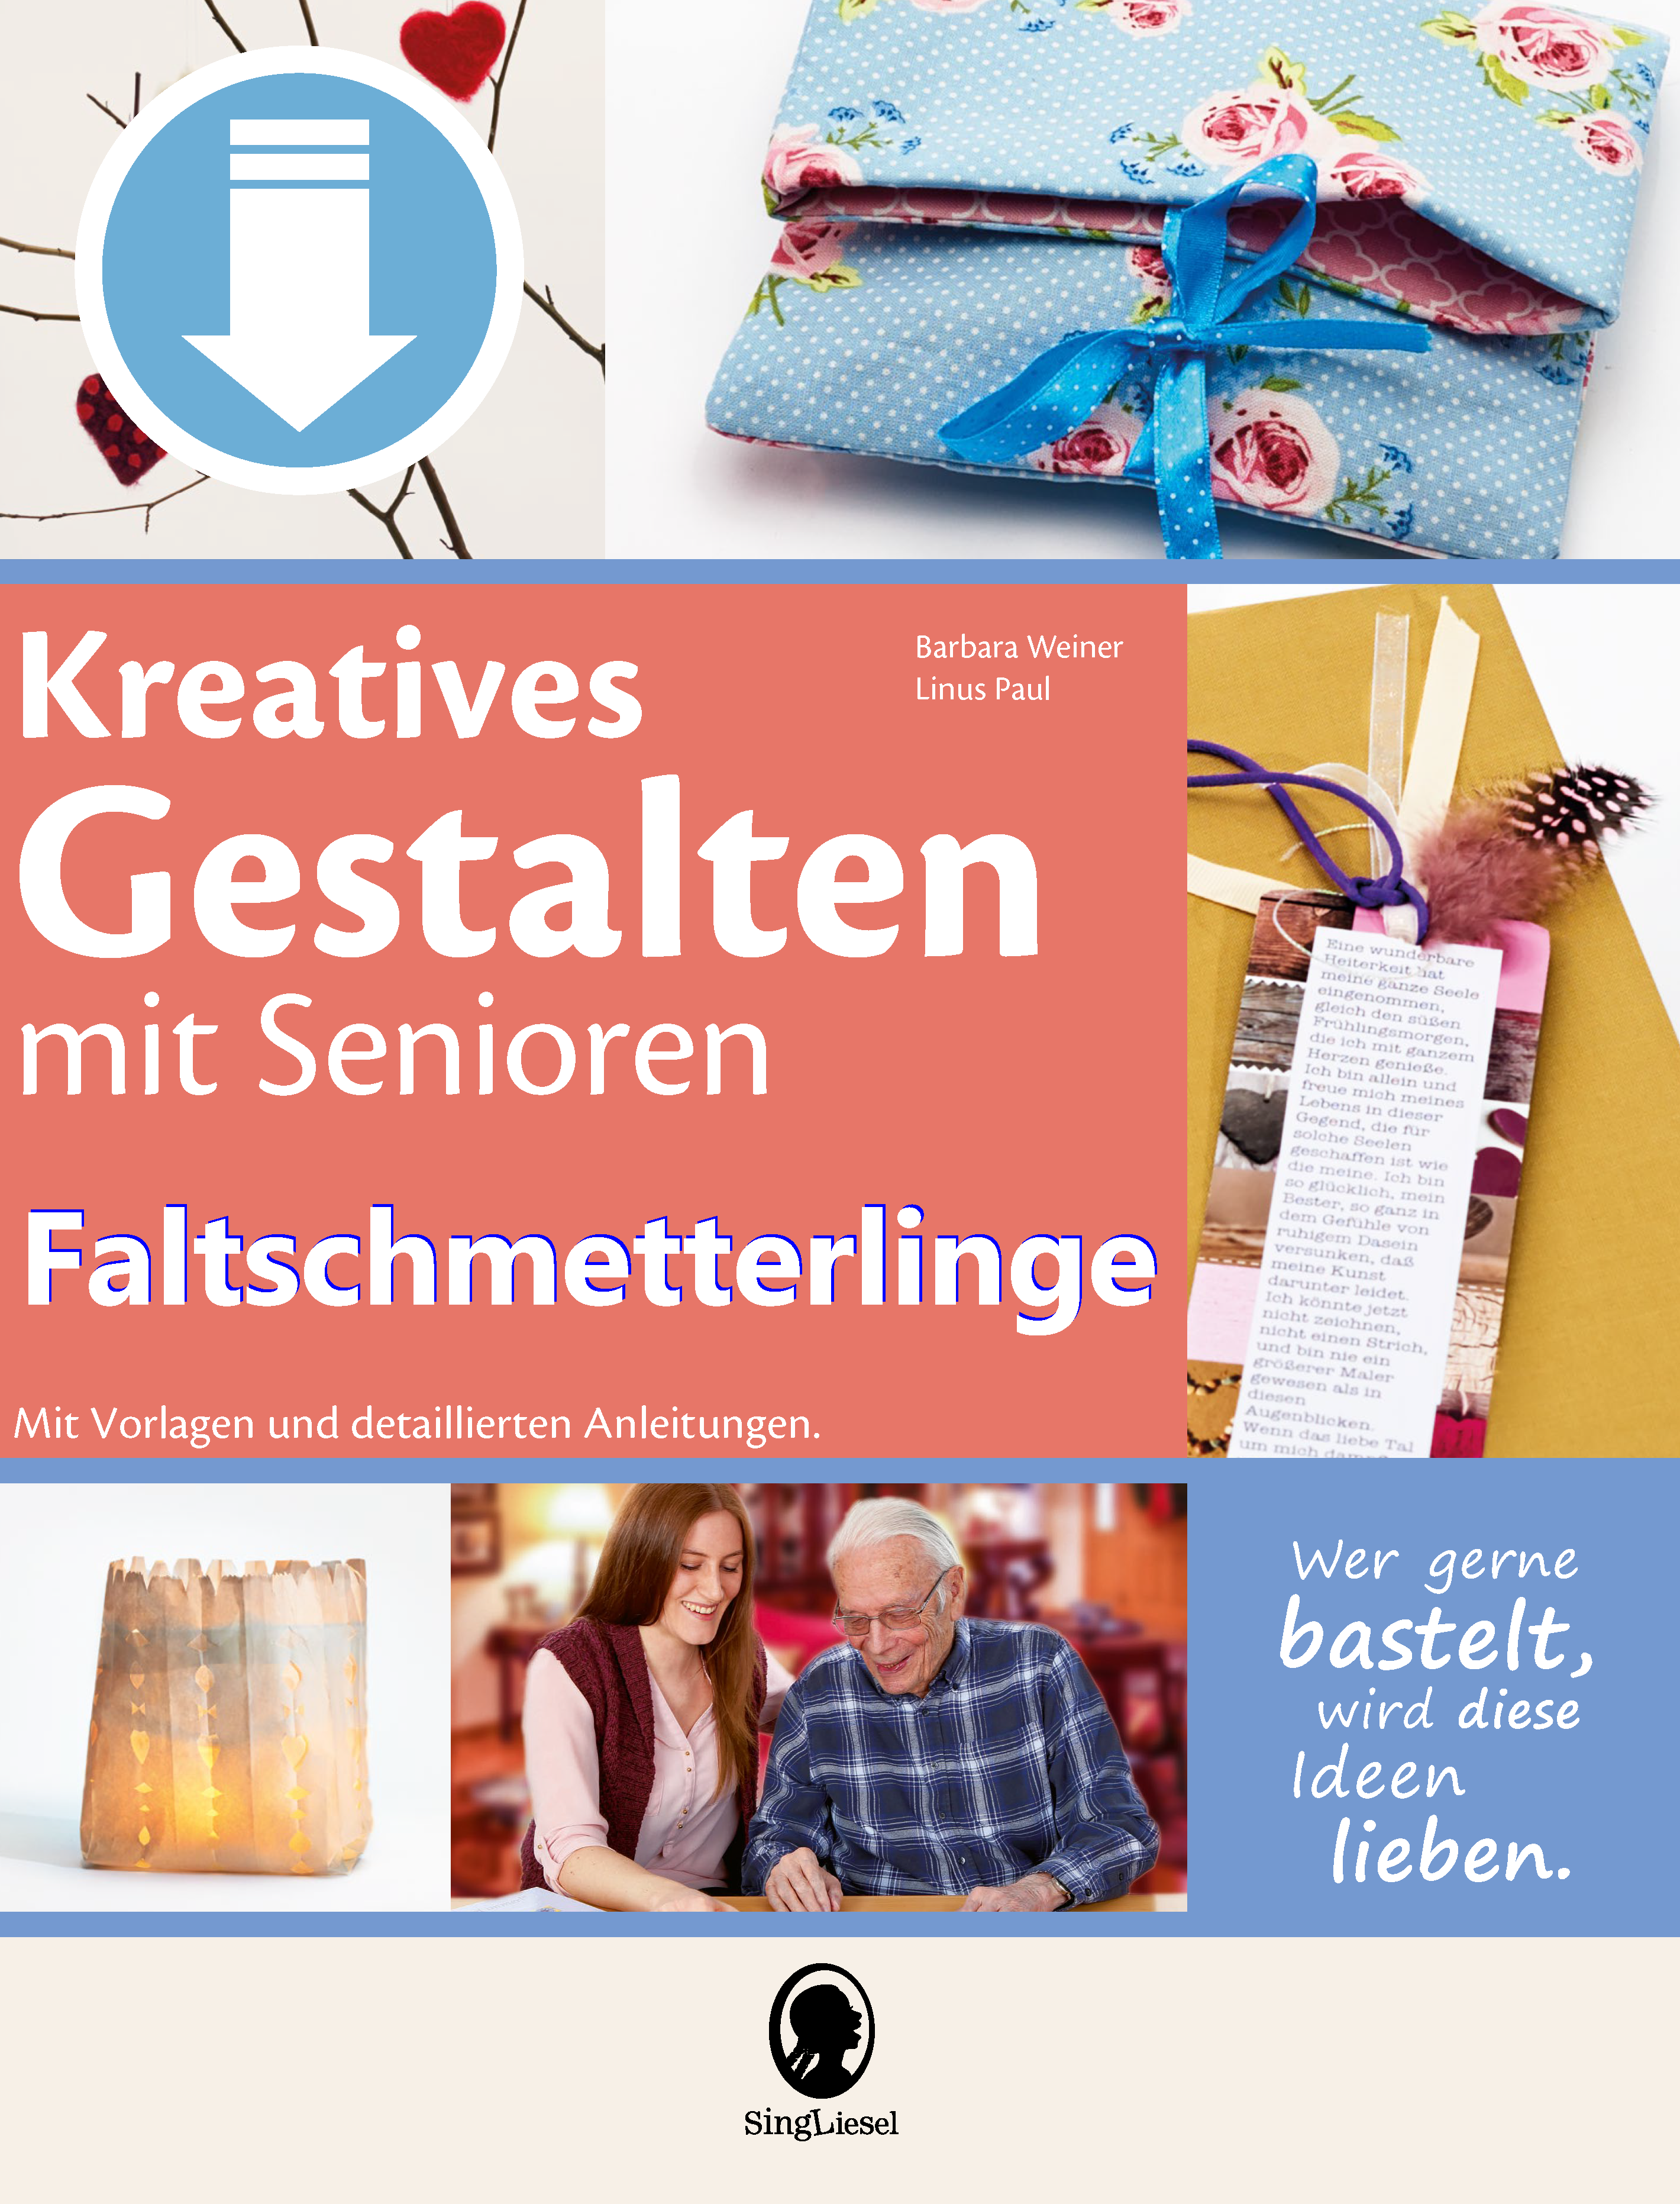 Faltschmetterlinge Bastelanleitung - Kreatives Gestalten Buch - Download - PDF